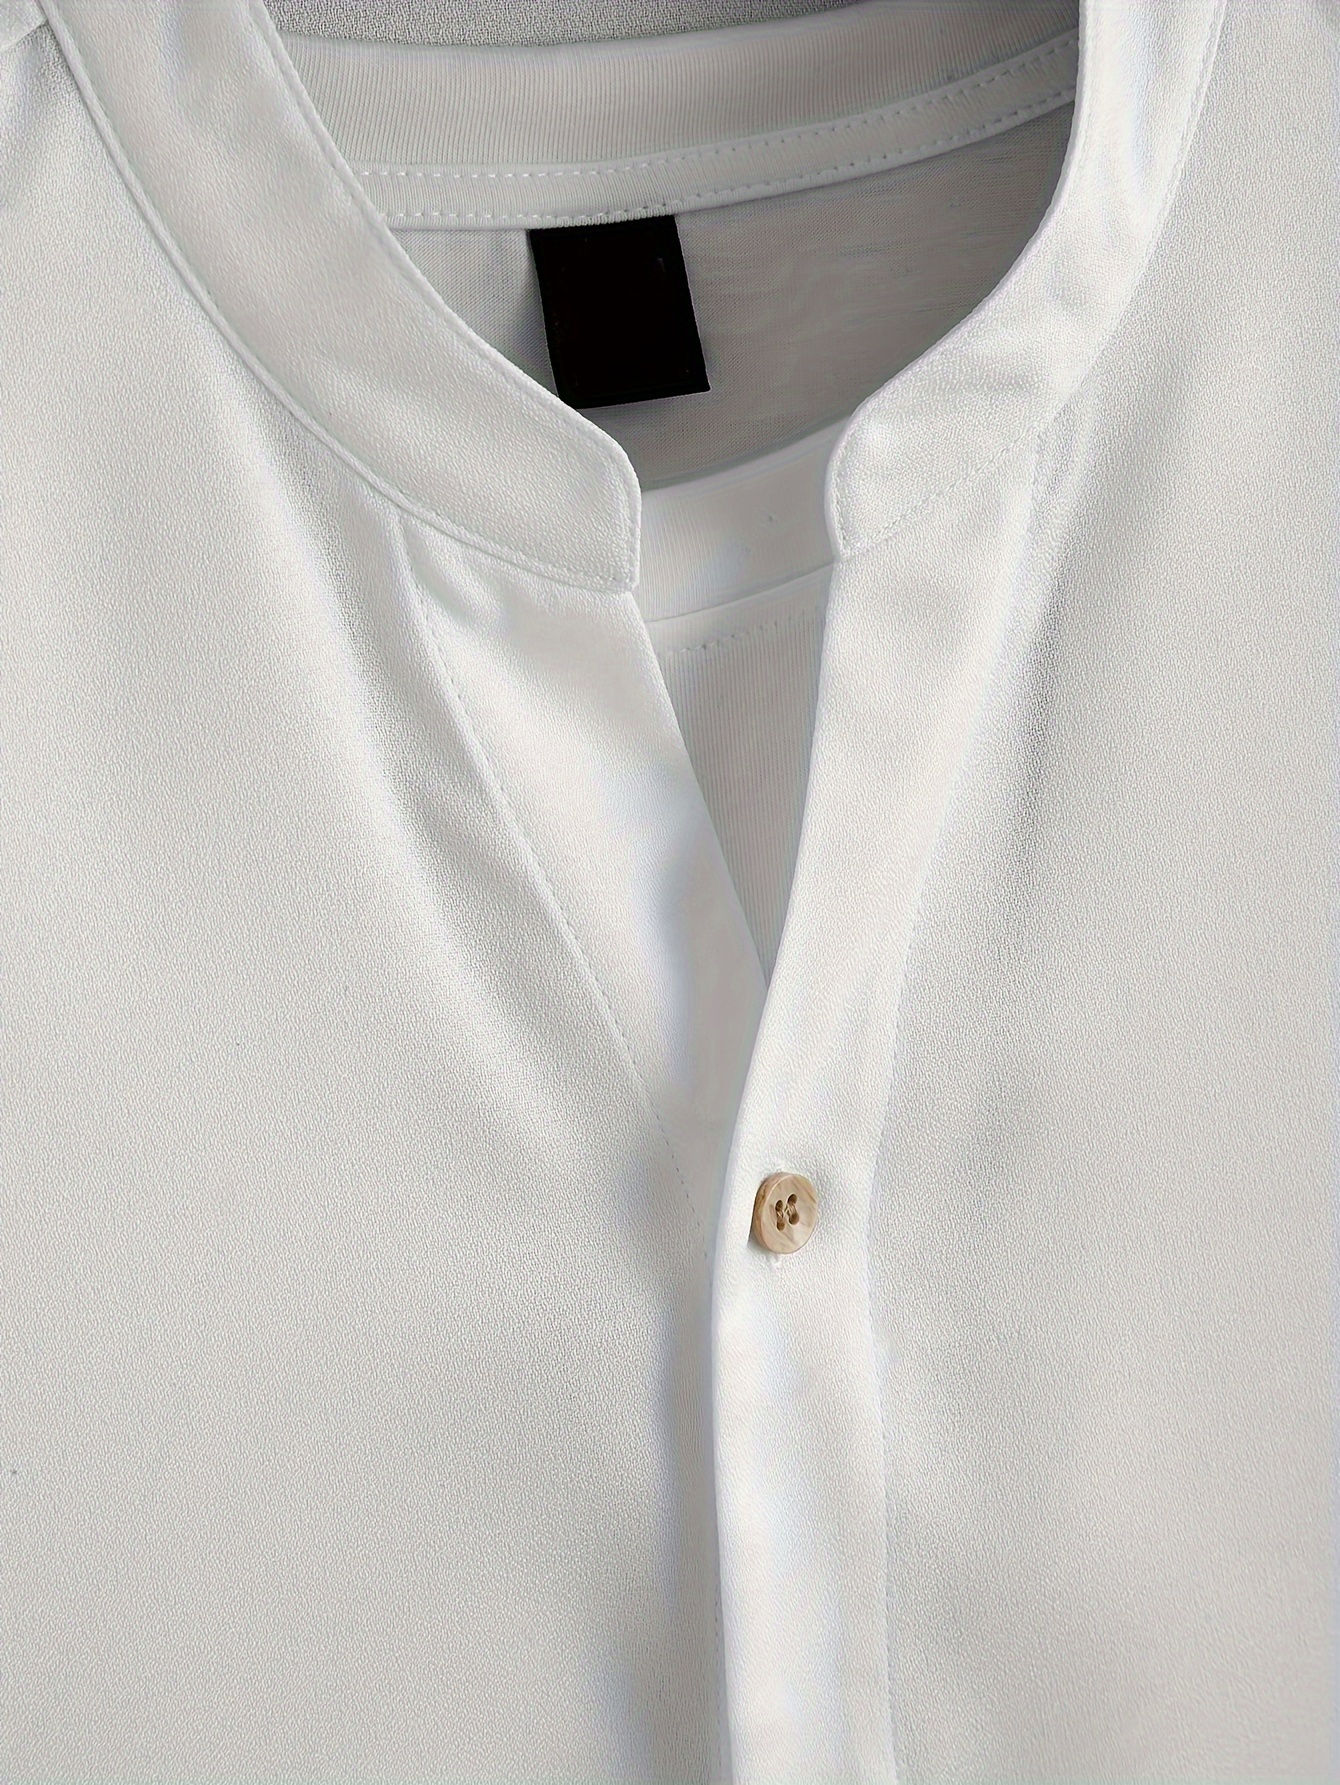 TIHLMK Mens Long Sleeve T Shirts Men Casual Printing Stand-up Collar Long  Sleeve Slim Fit Base Shirt Blouse 